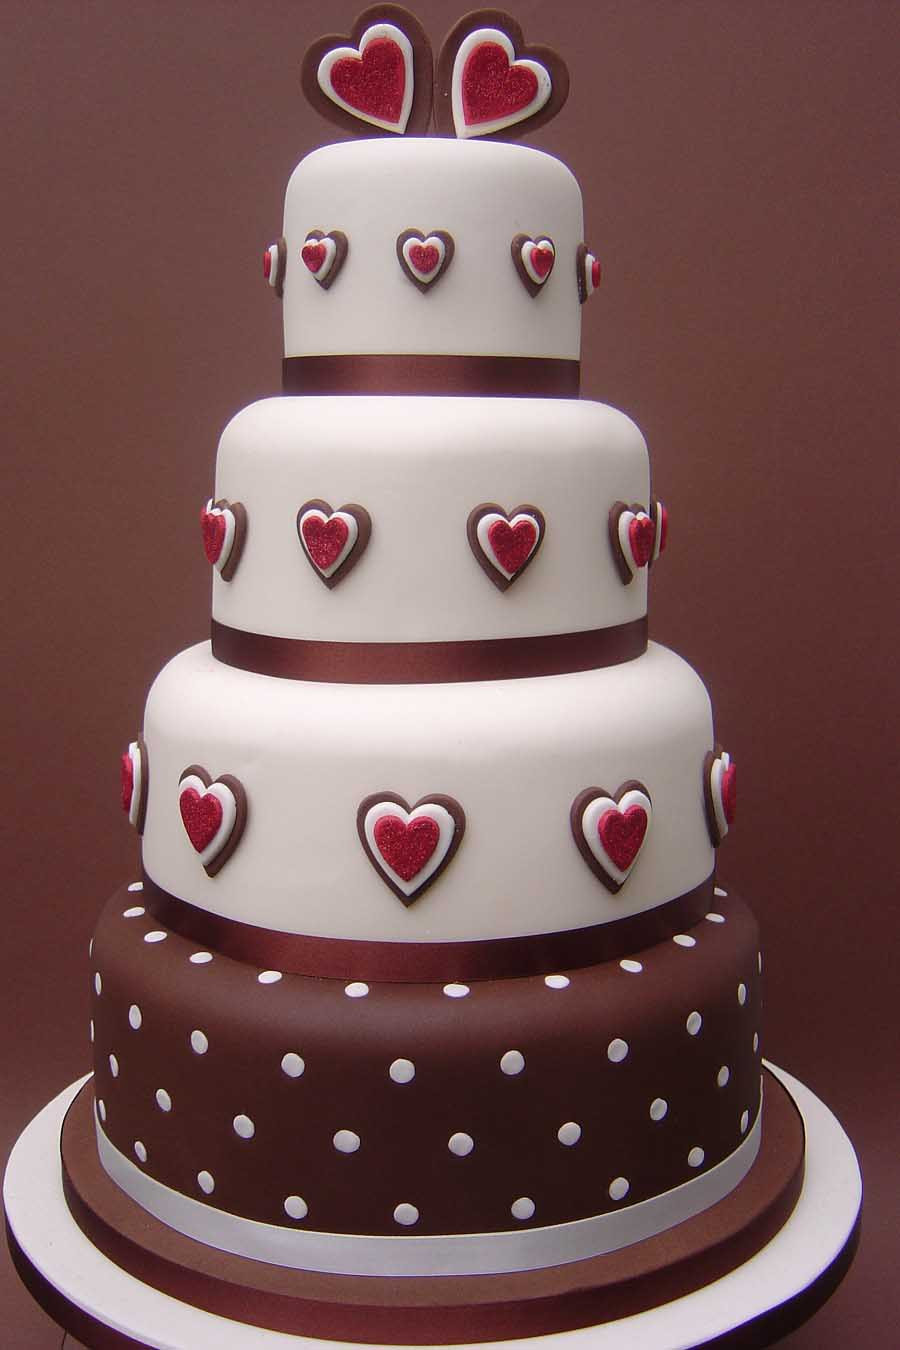 Wedding Cakes Designs the Best Ideas for Latest Wedding Cake Designs Starsricha